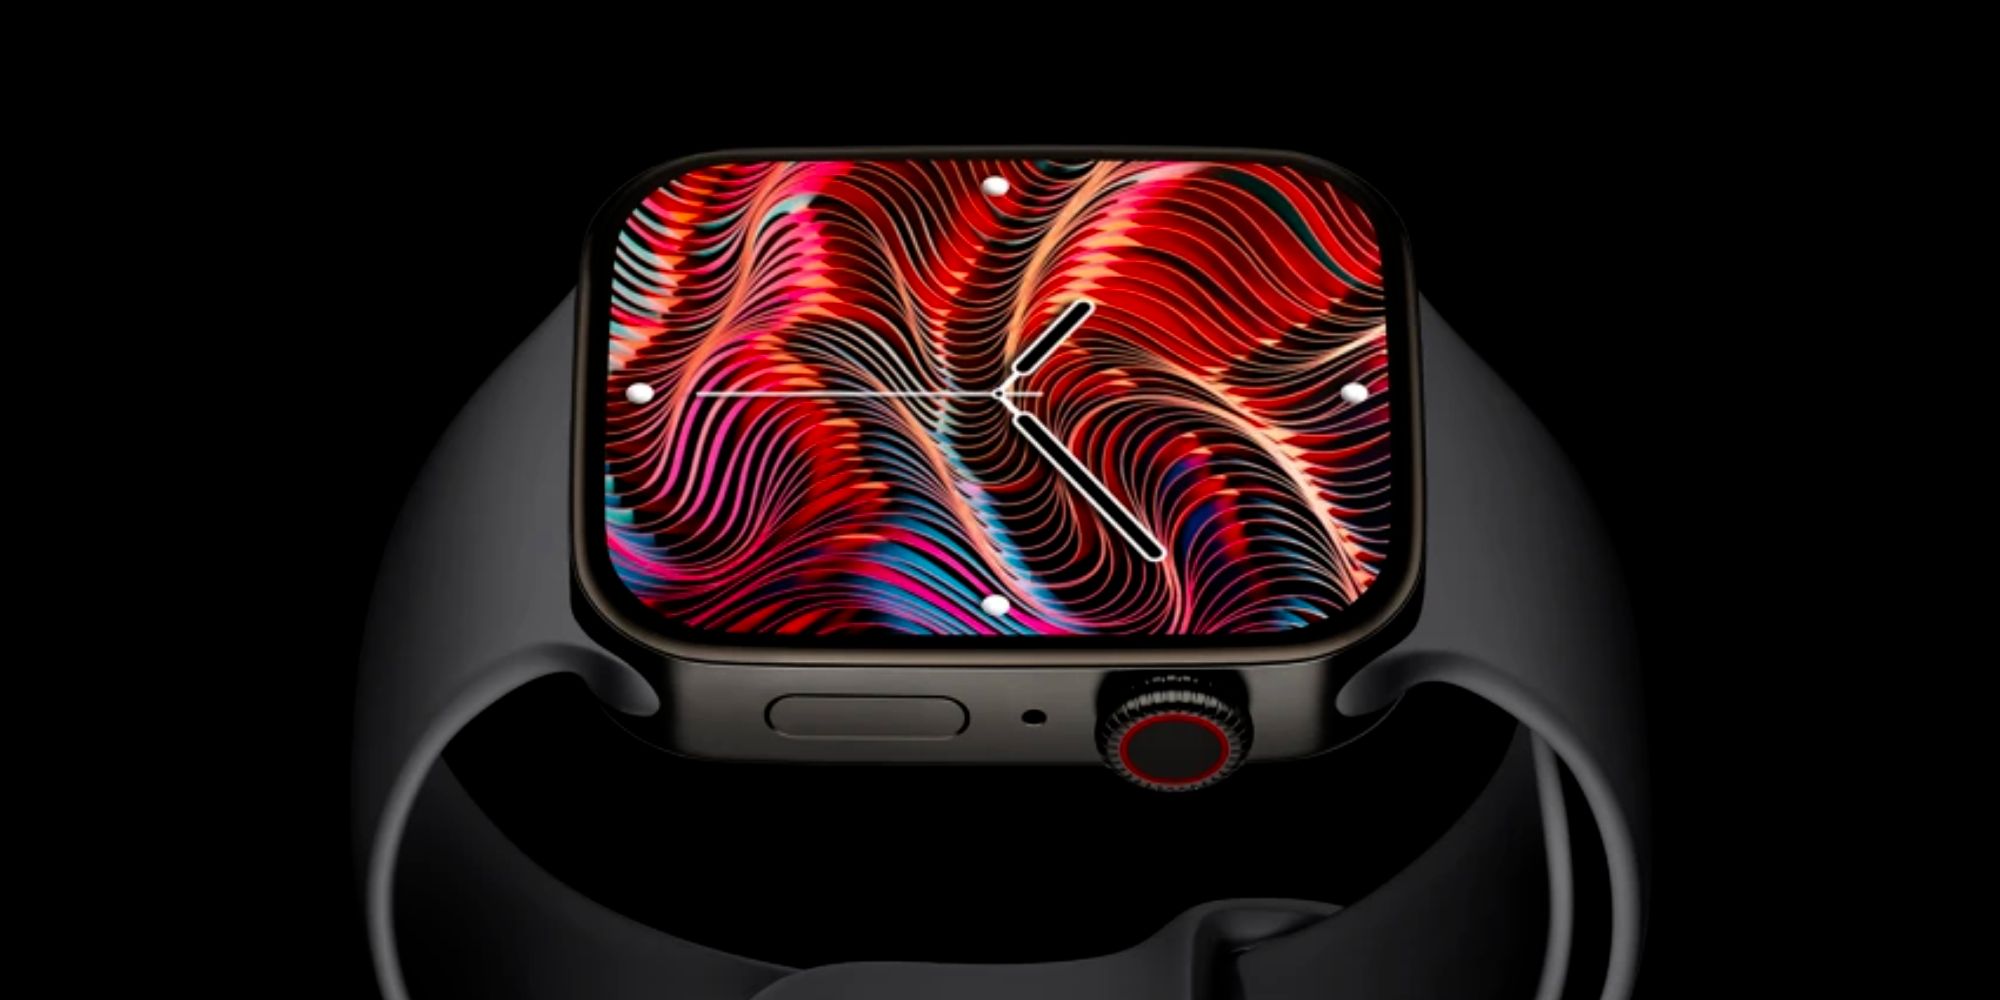 Apple Watch Series 7 concept render in black